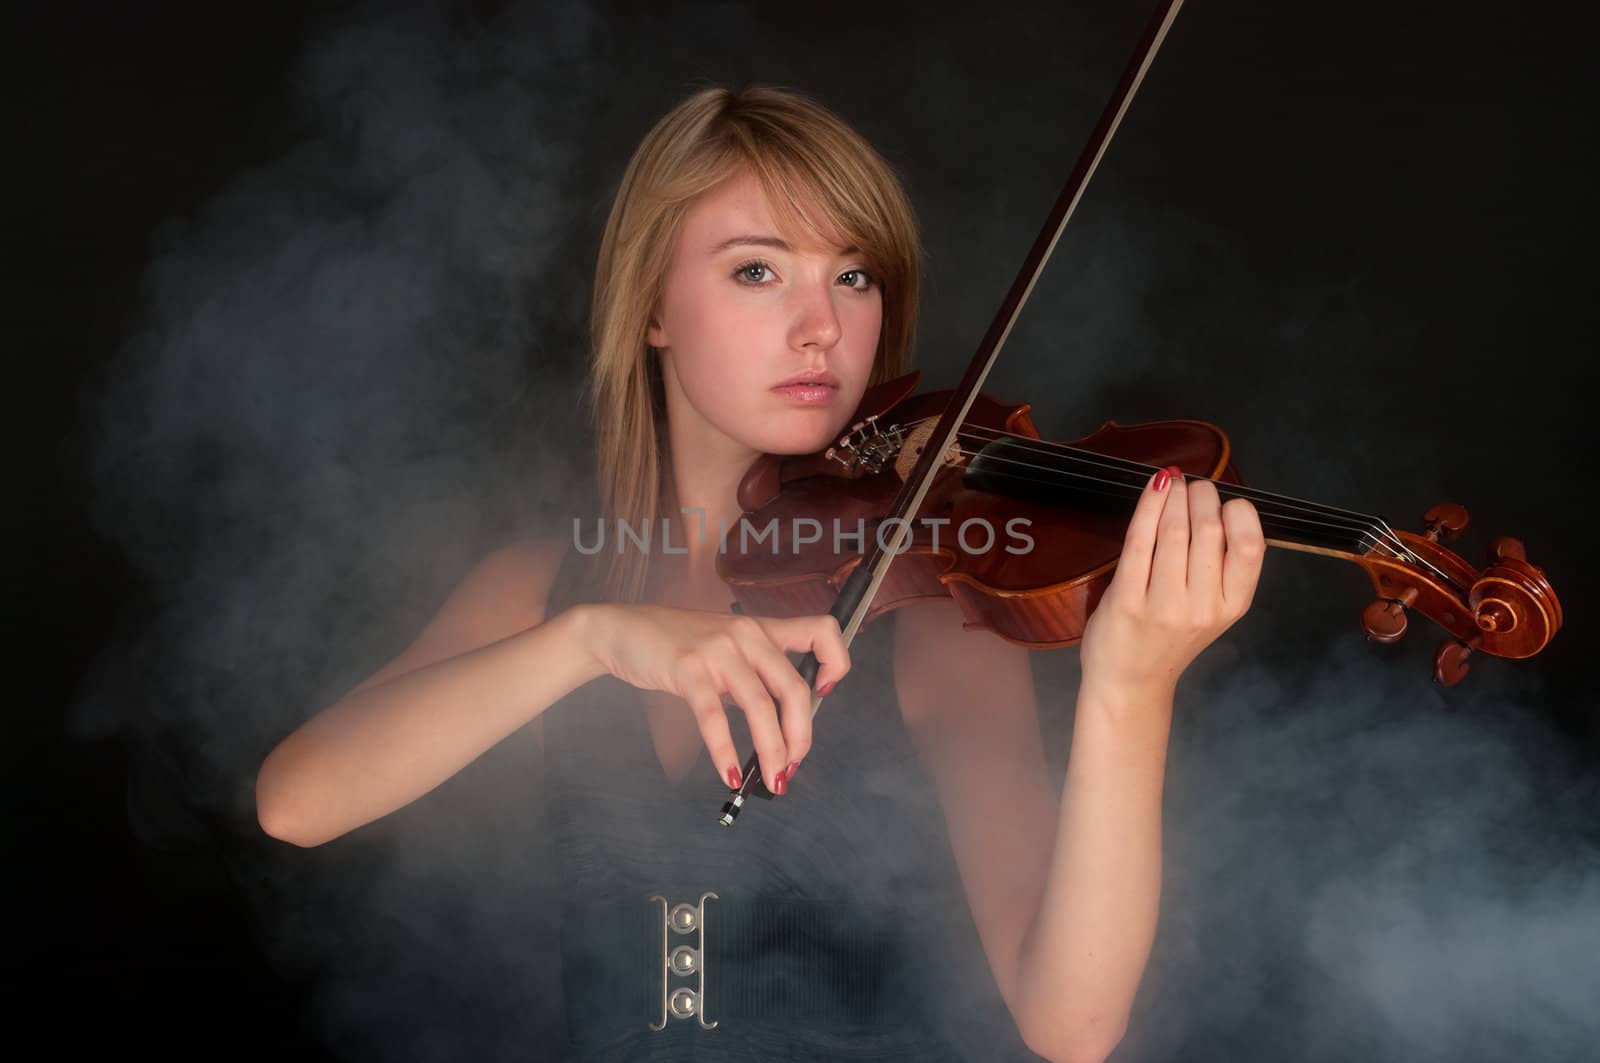 Playing violin